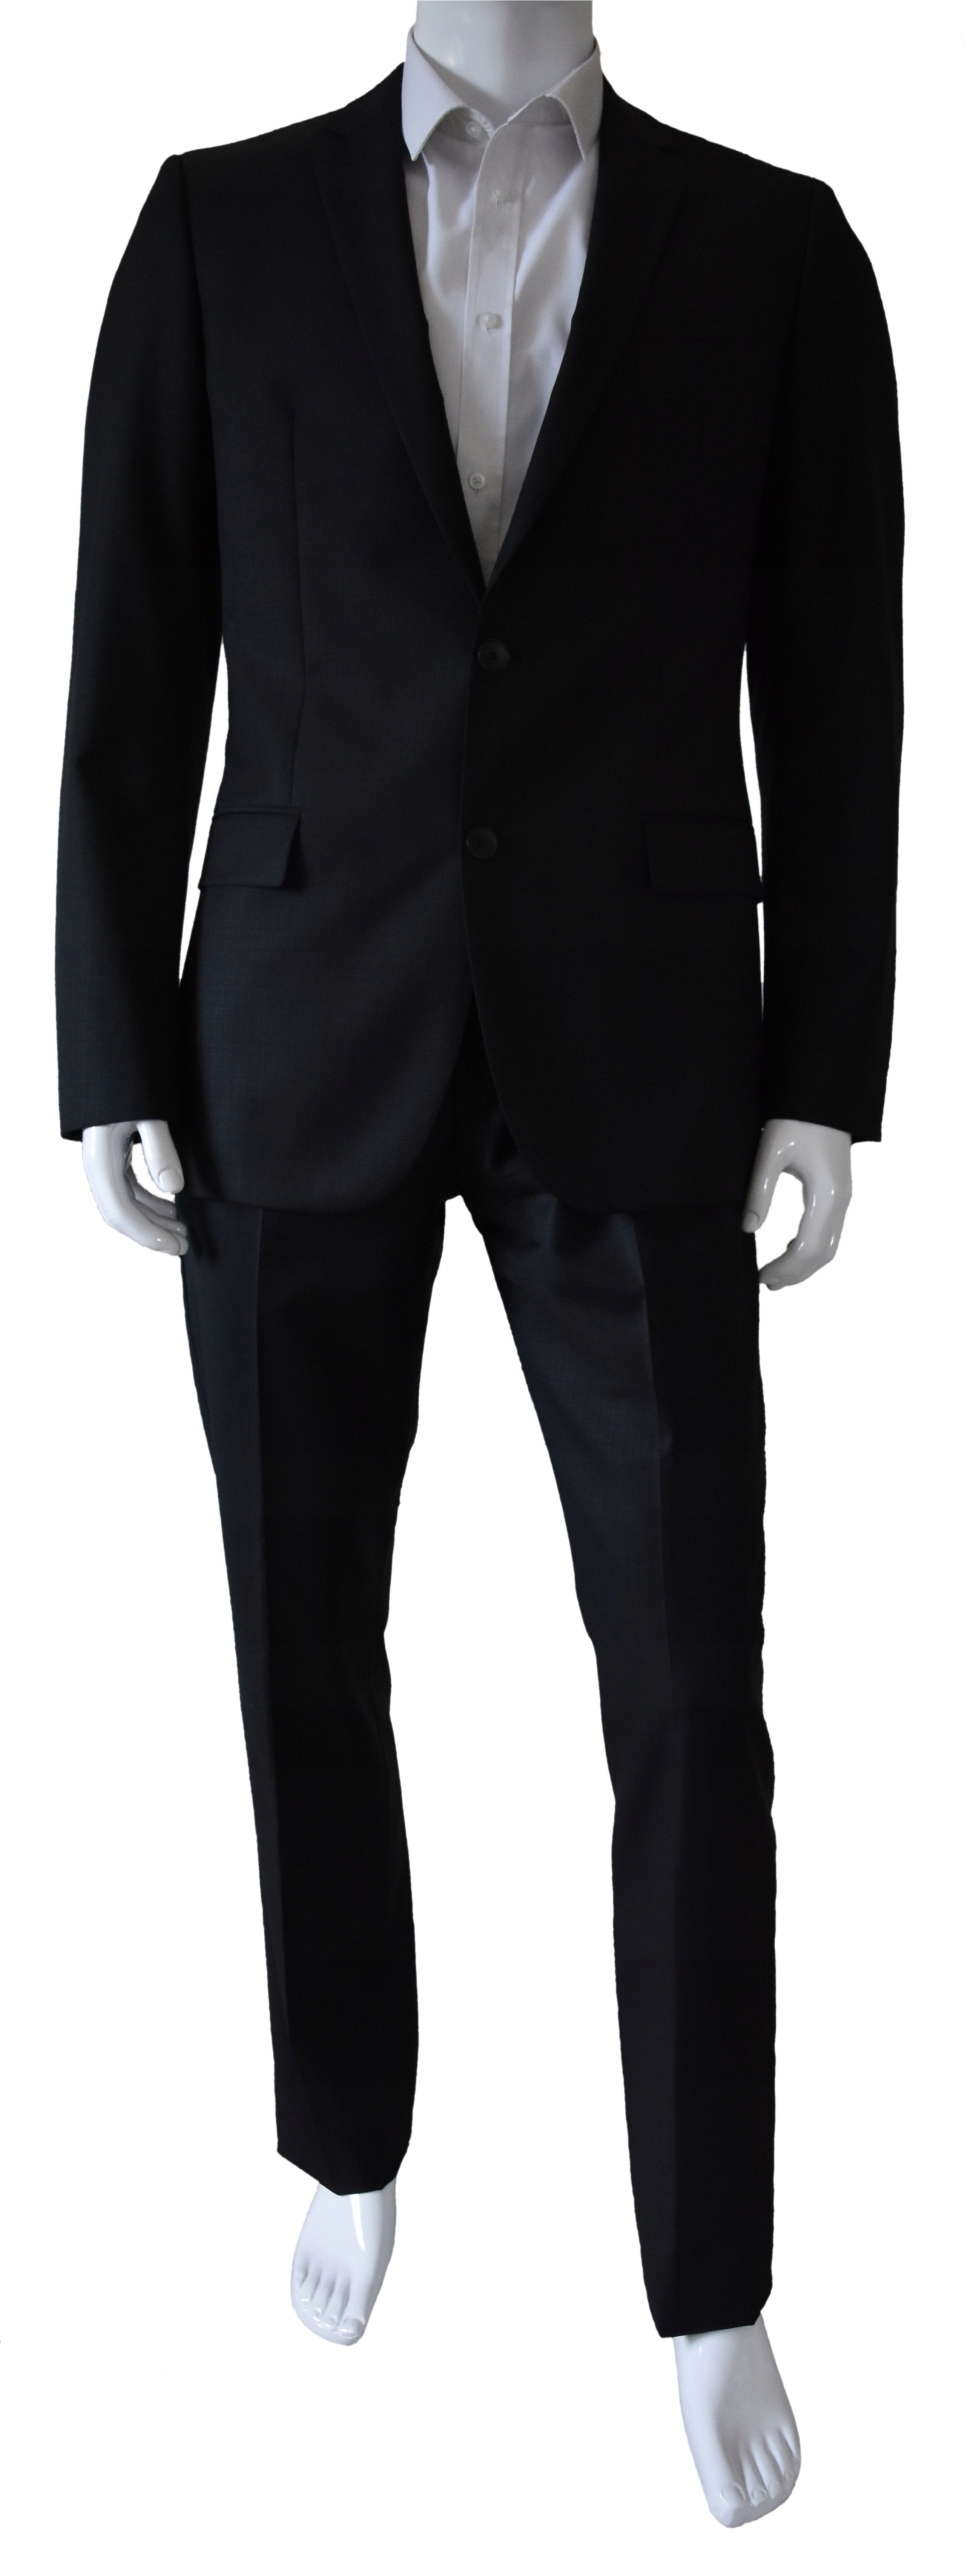 Hugo Boss стильный мужской костюм набор R.50 м / л